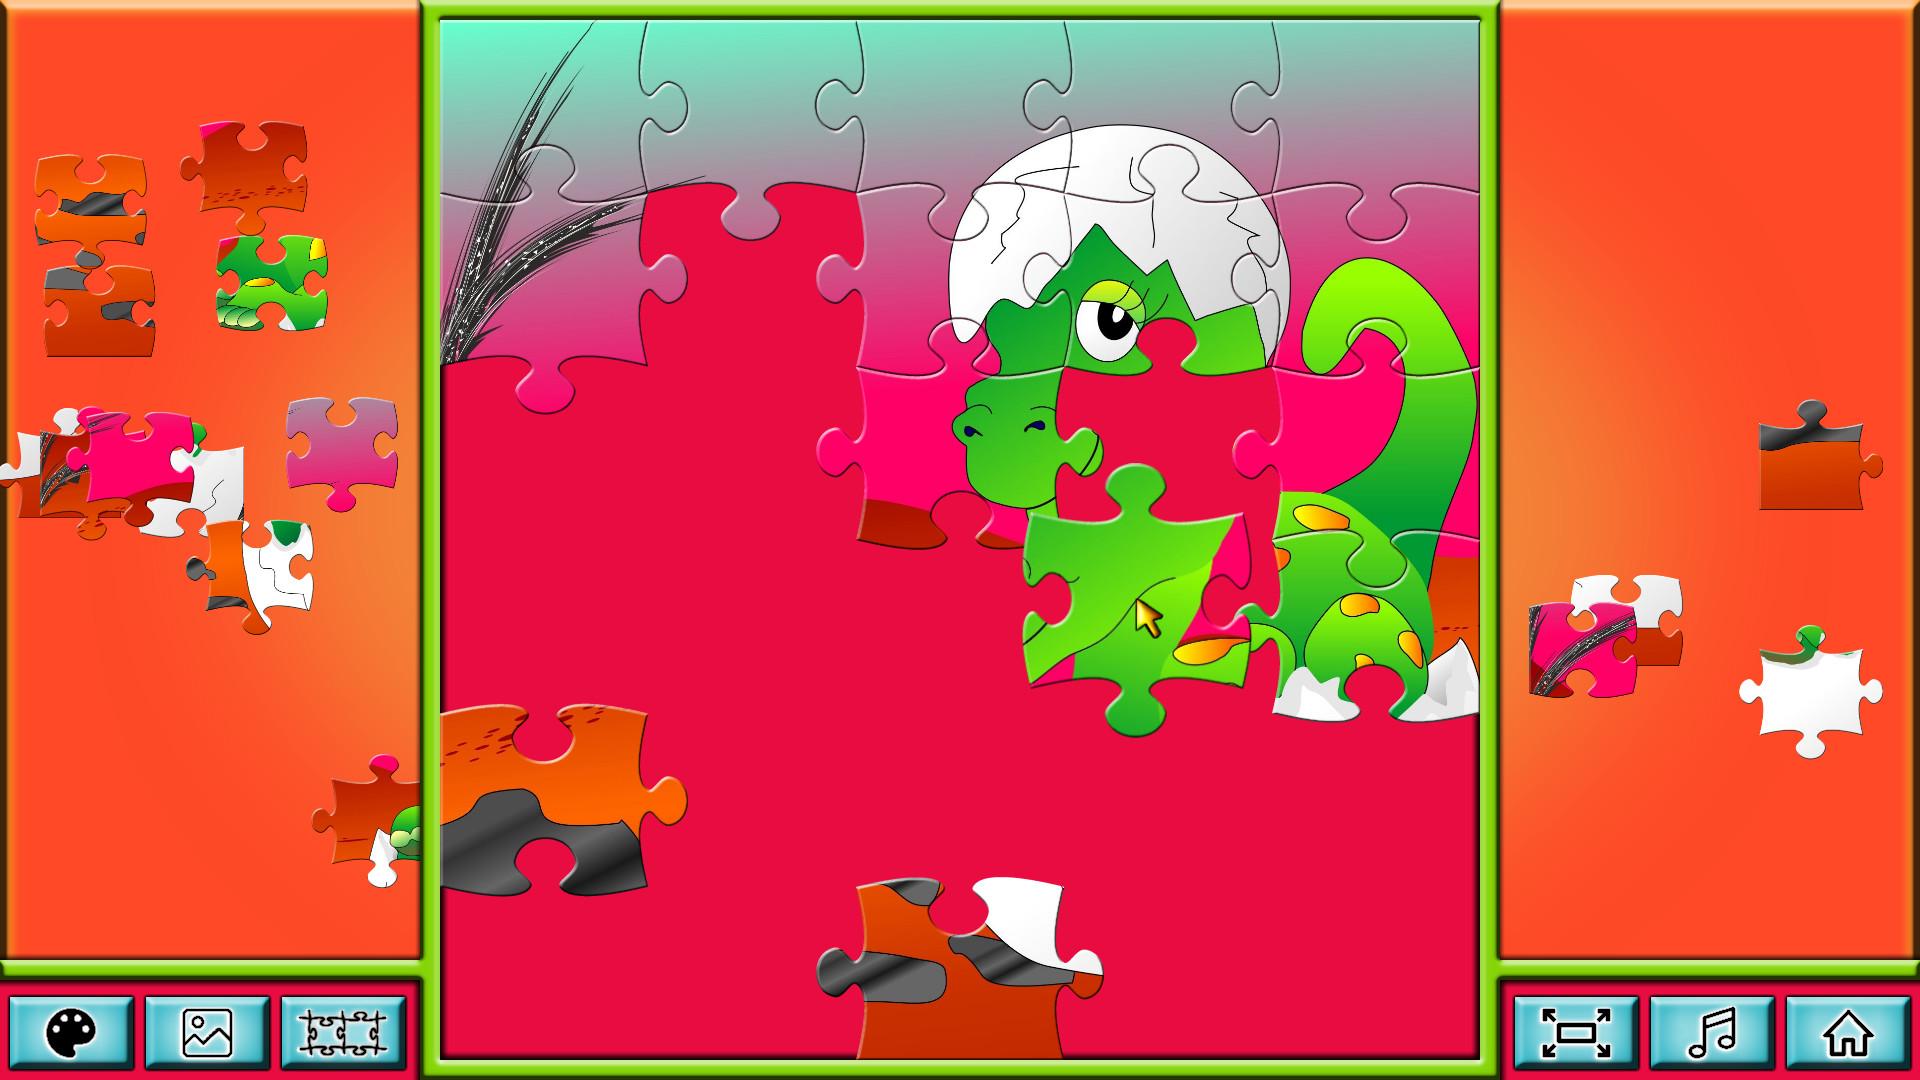 Screenshot №8 from game Pixel Puzzles Junior Jigsaw